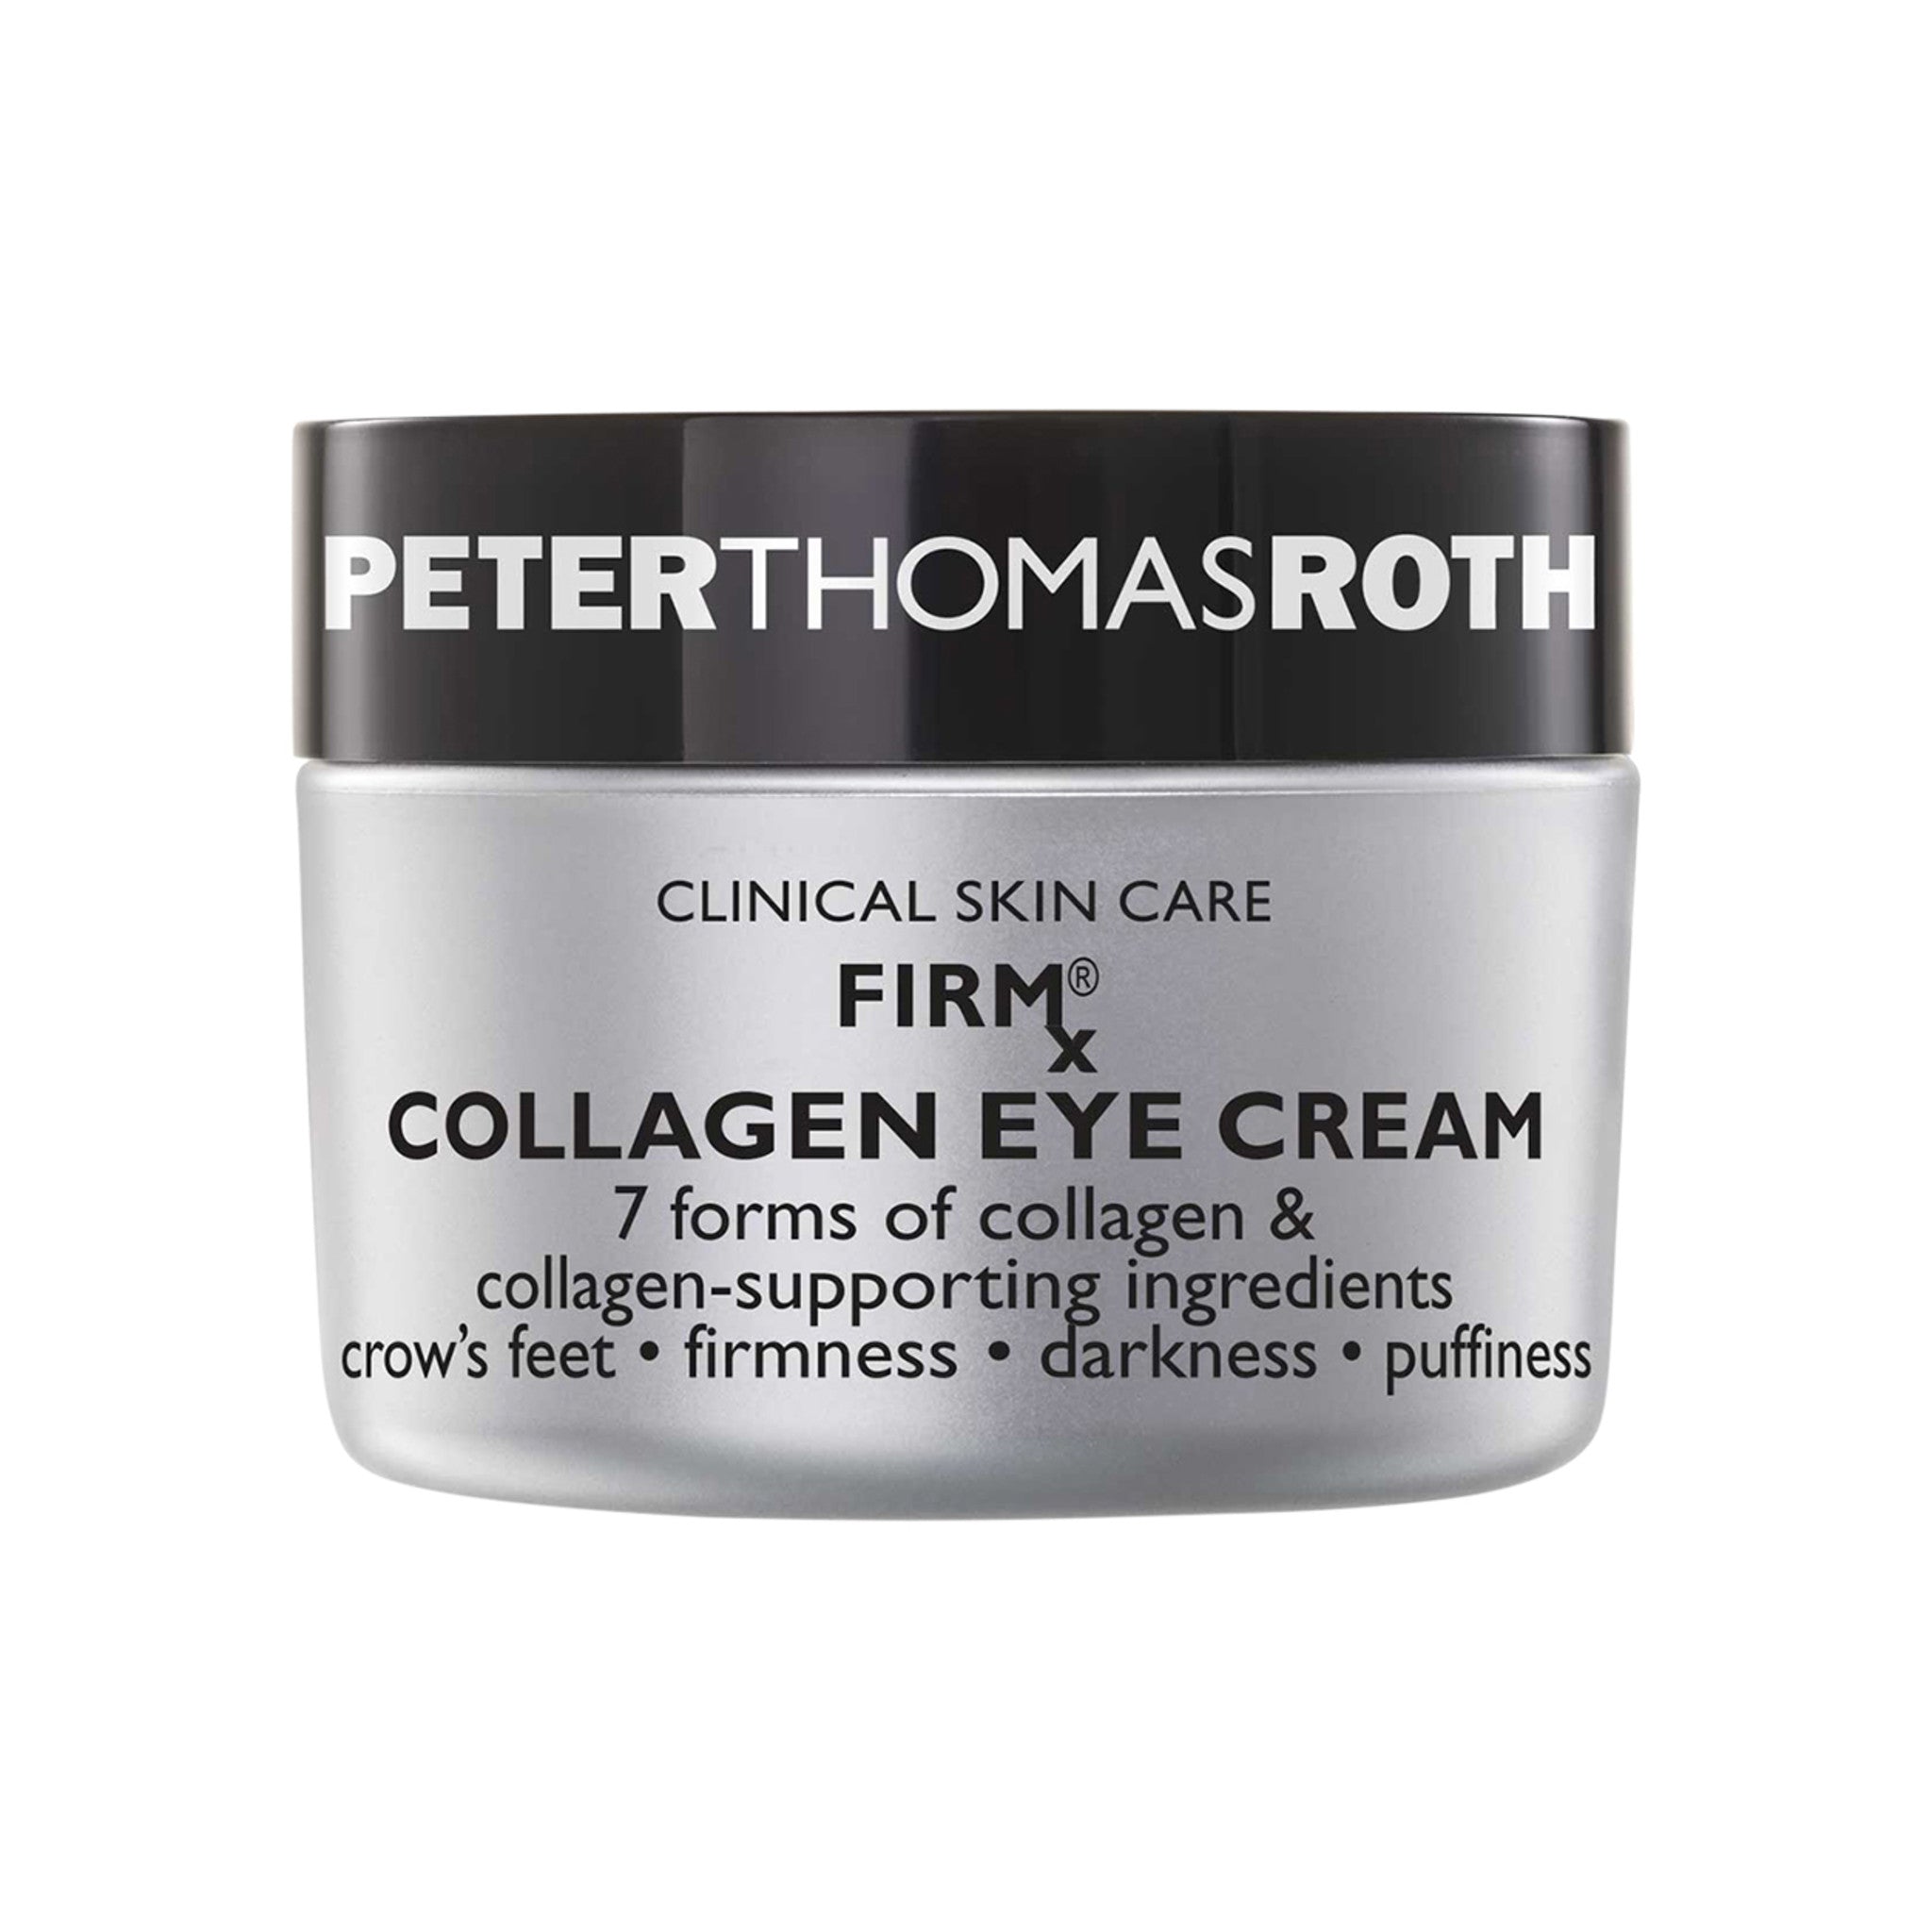 Peter Thomas Roth FirmX Collagen Eye Cream main image.